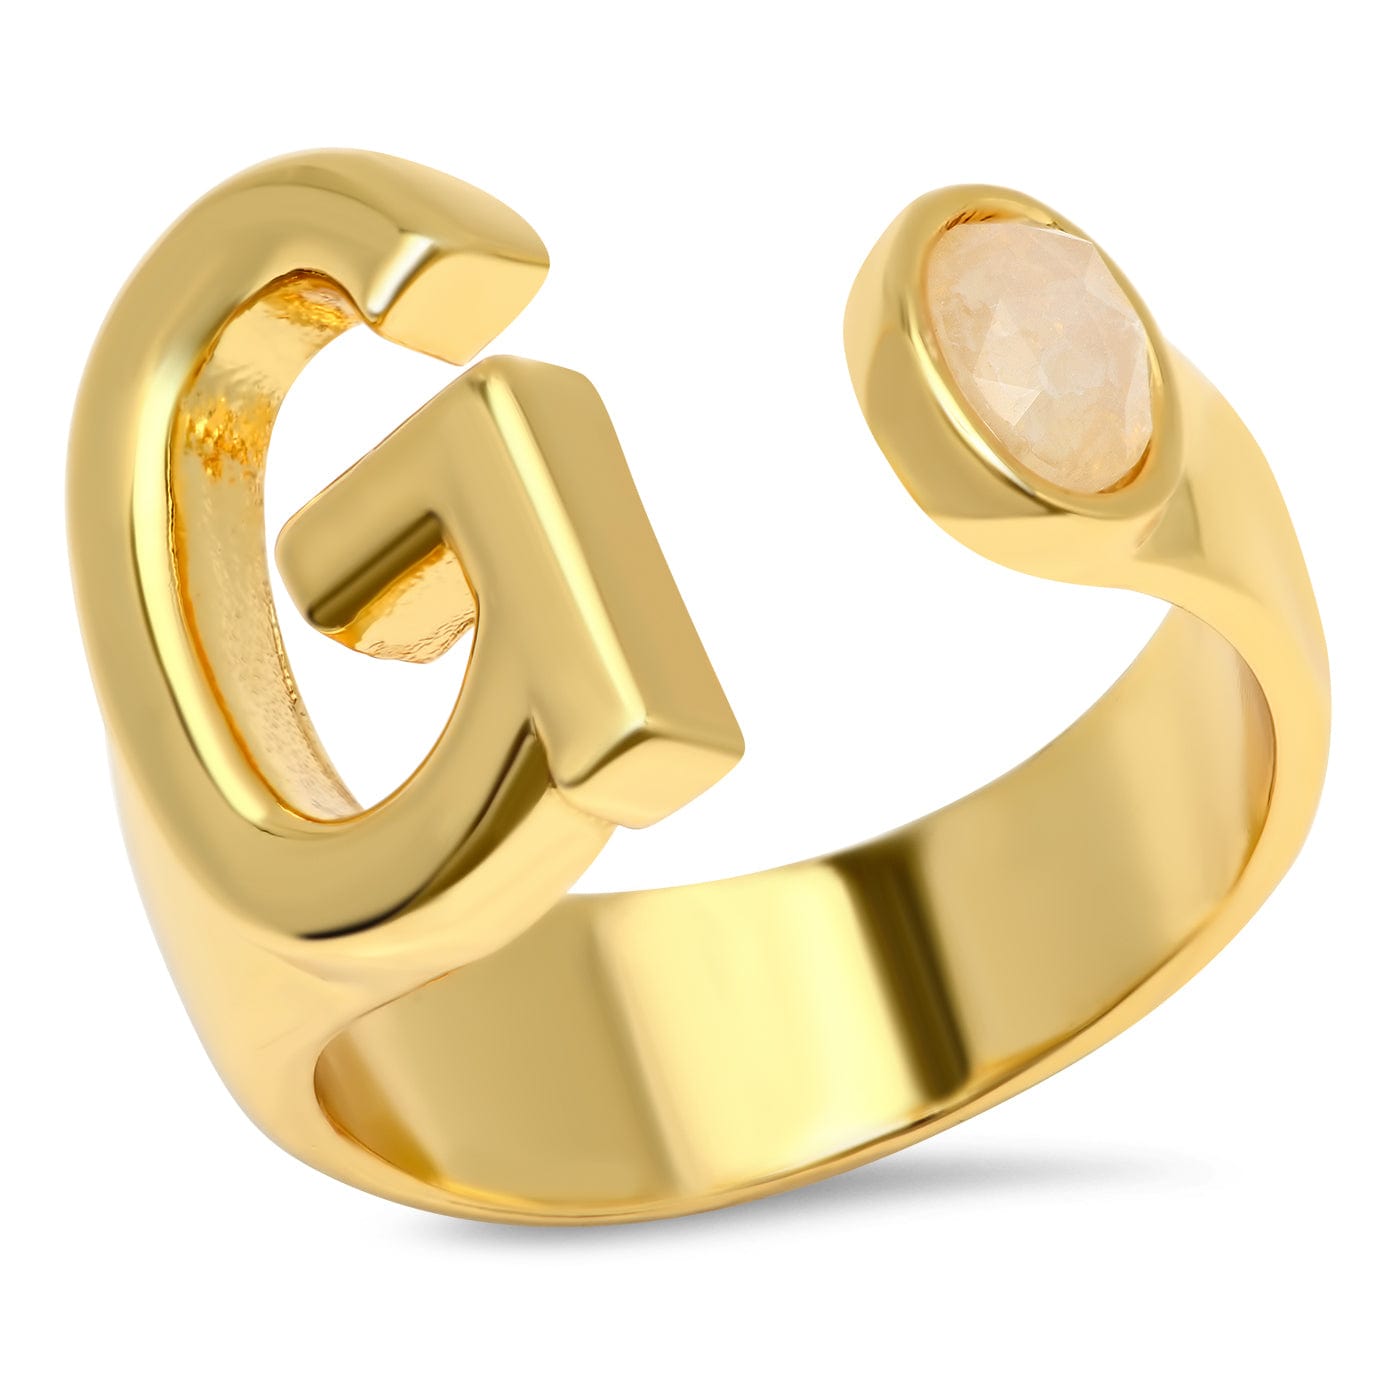 TAI JEWELRY Rings G Initial Wrap Ring